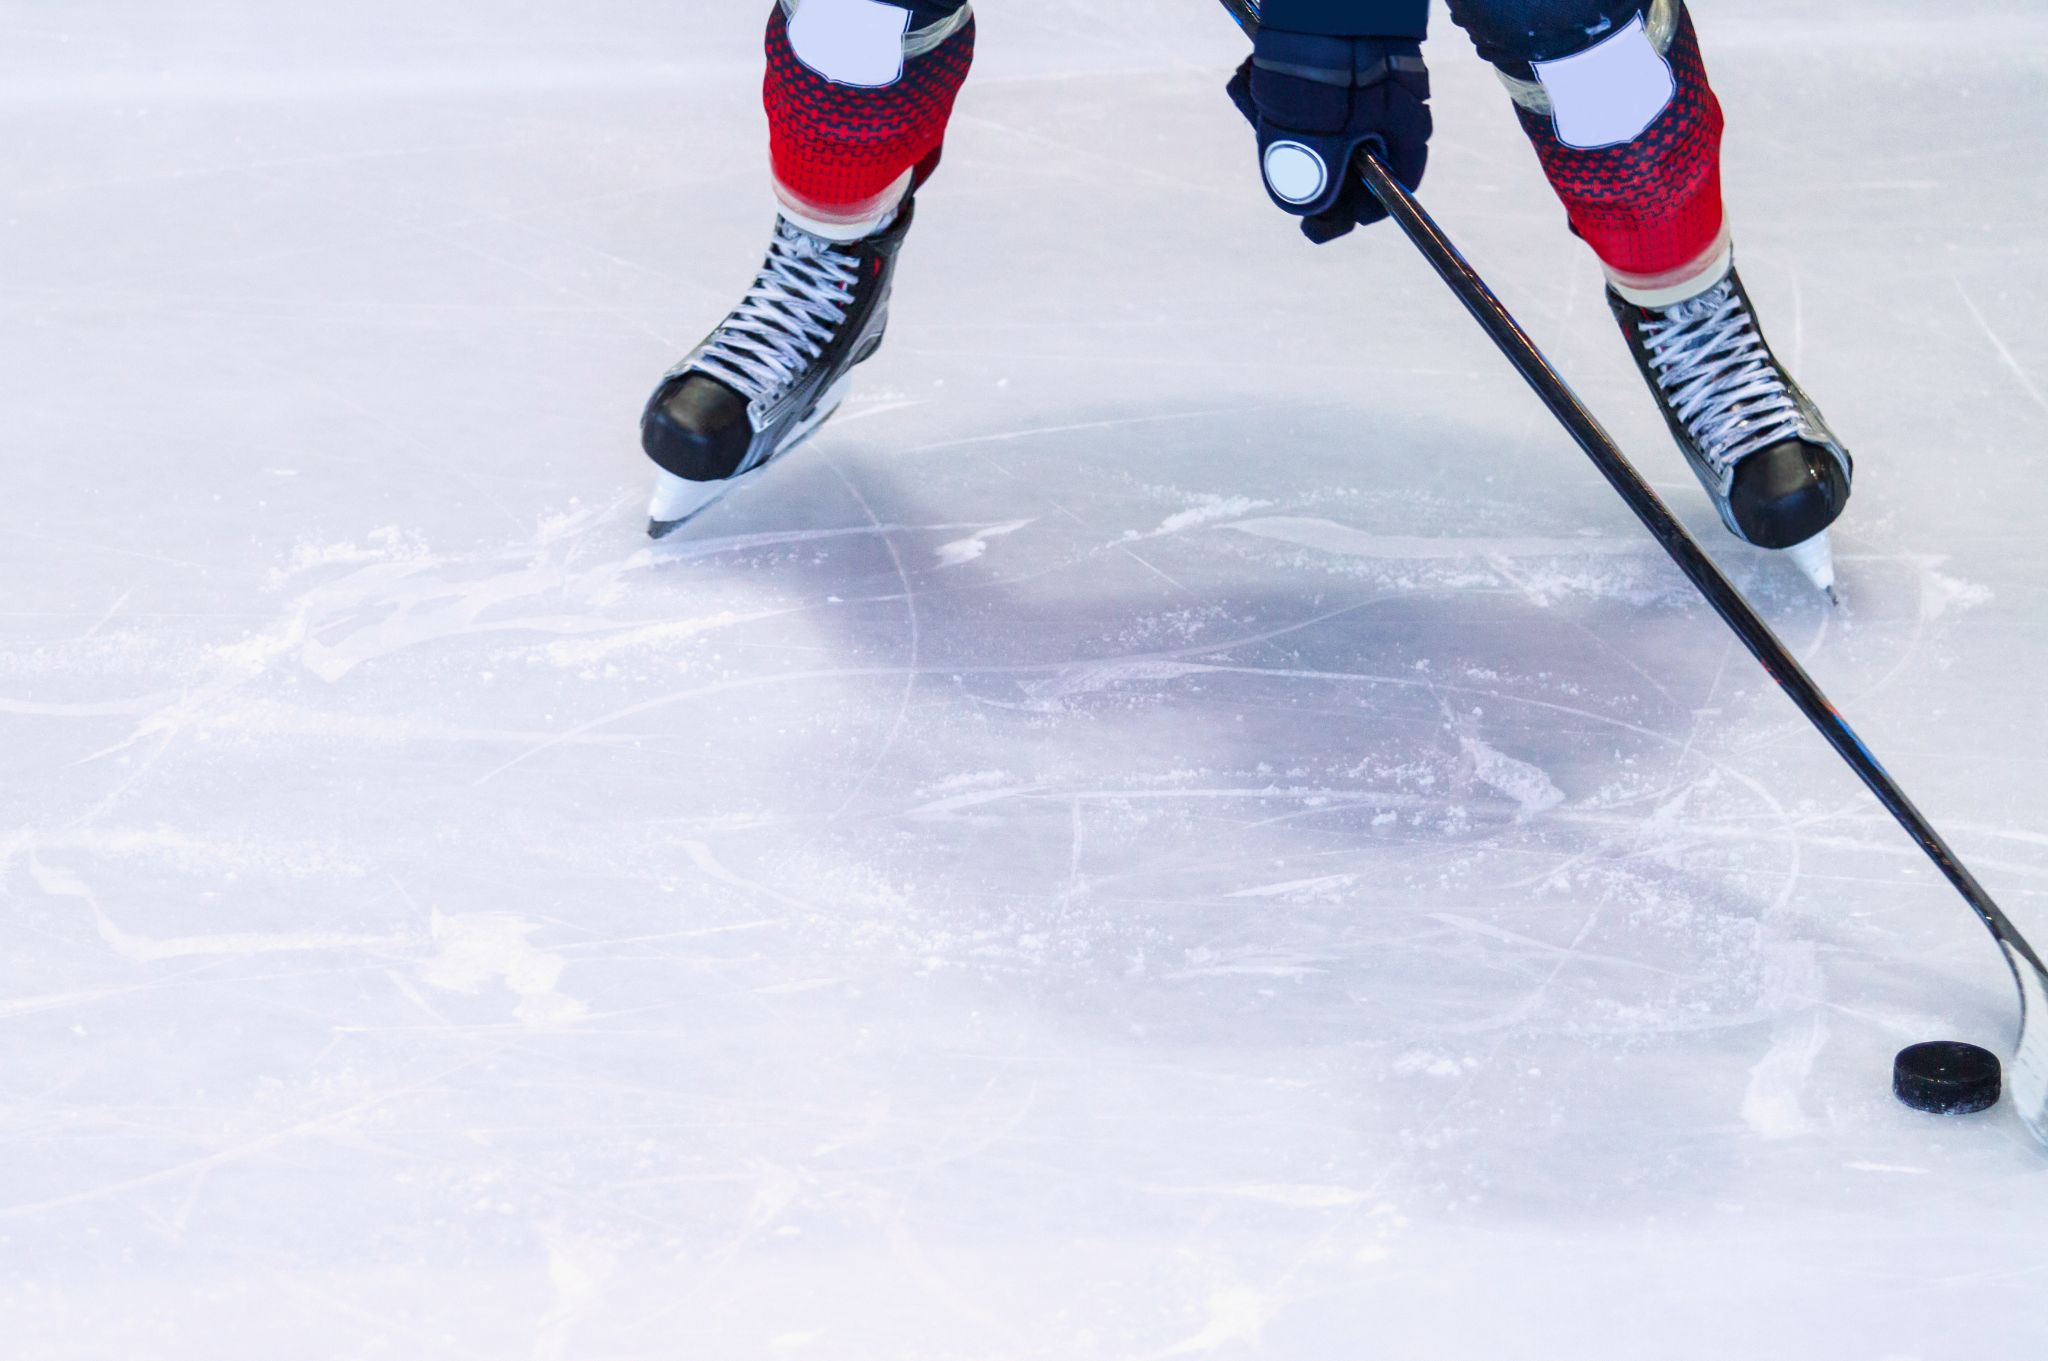 An ice hockey player on an ice rink